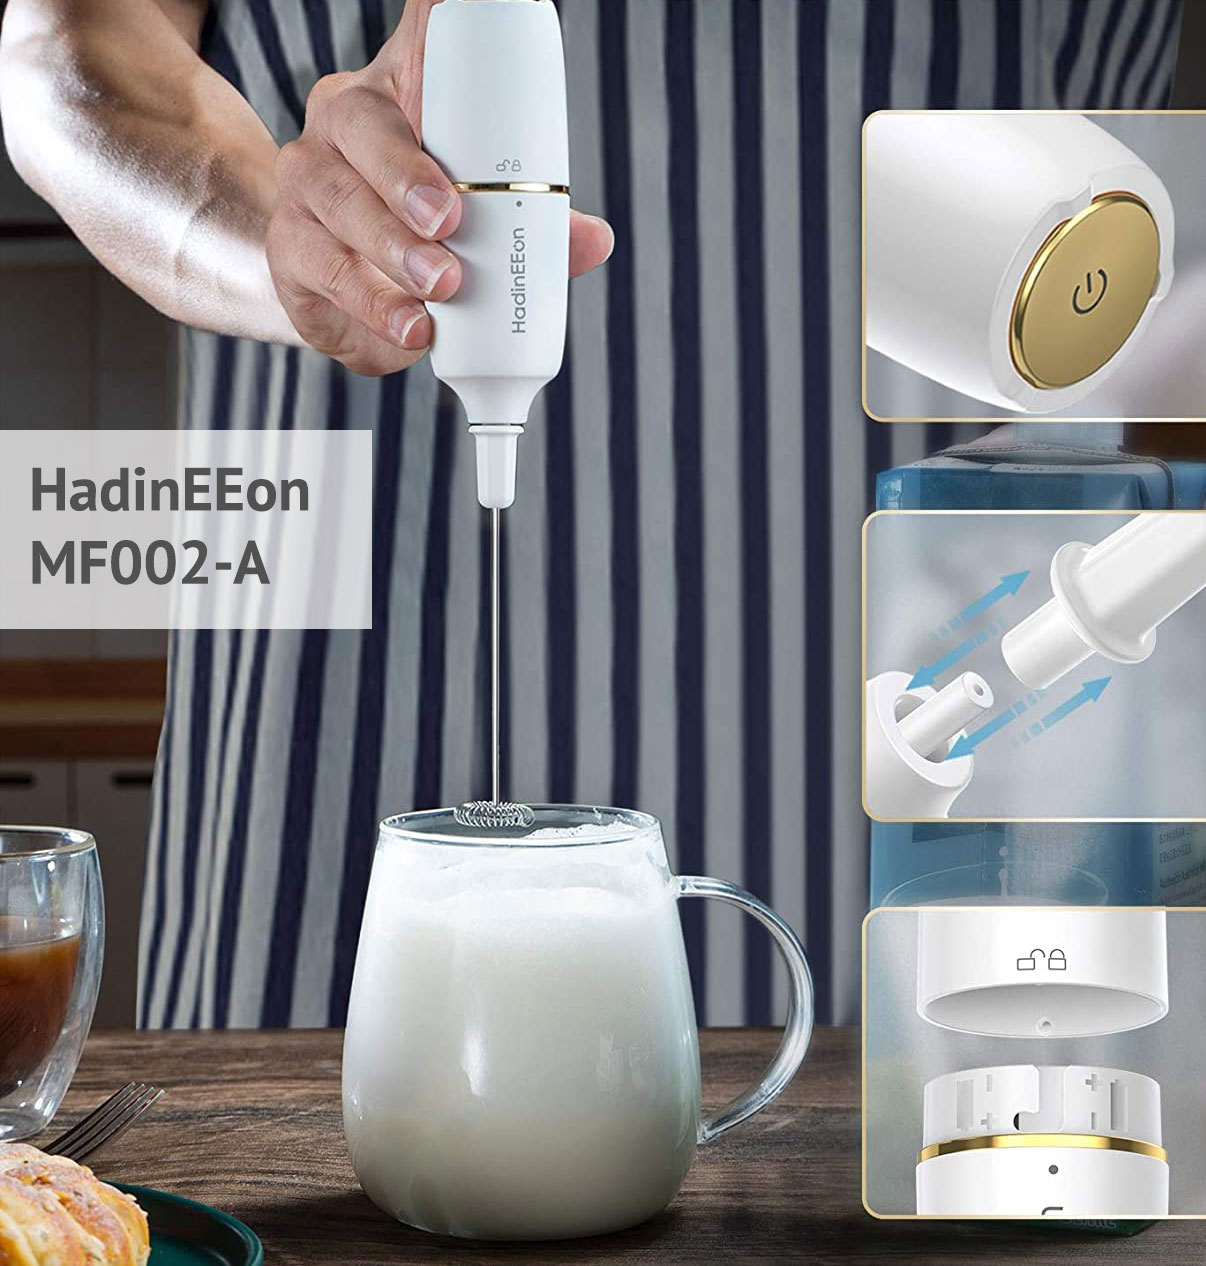 HadinEEon MF002-A Best Handheld Milk Frother